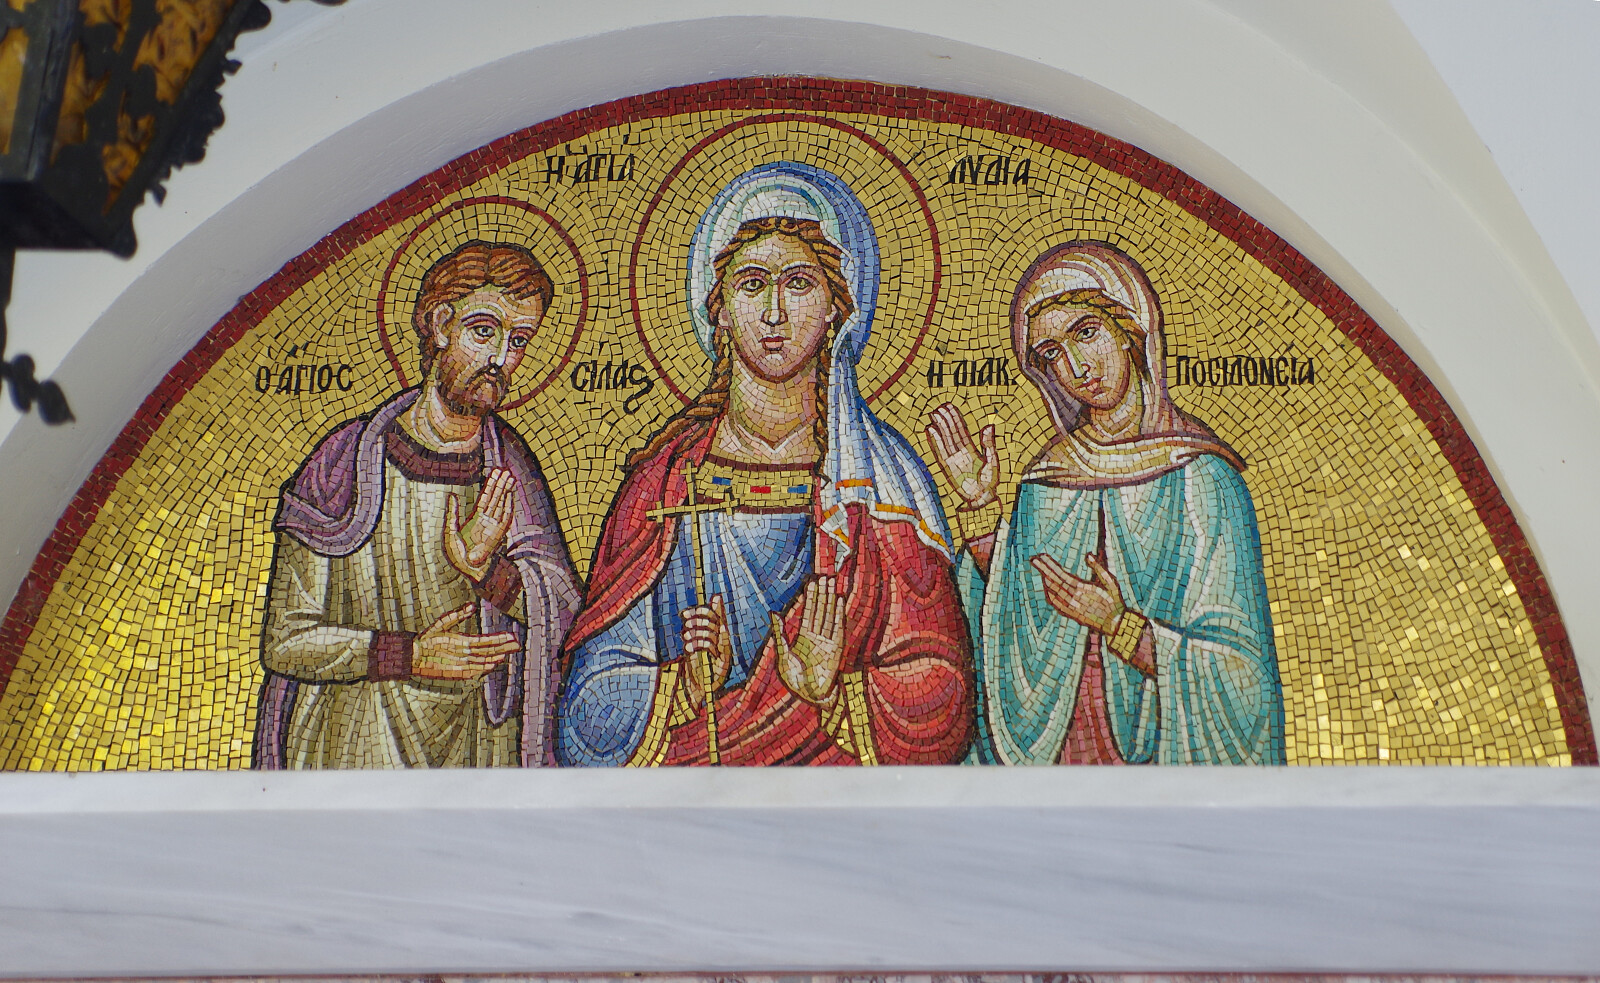 Mozaika w baptysterium św. Lidii - Berthold Werner, CC BY-SA 3.0 www.creativecommons.org, via Wikimedia Commons